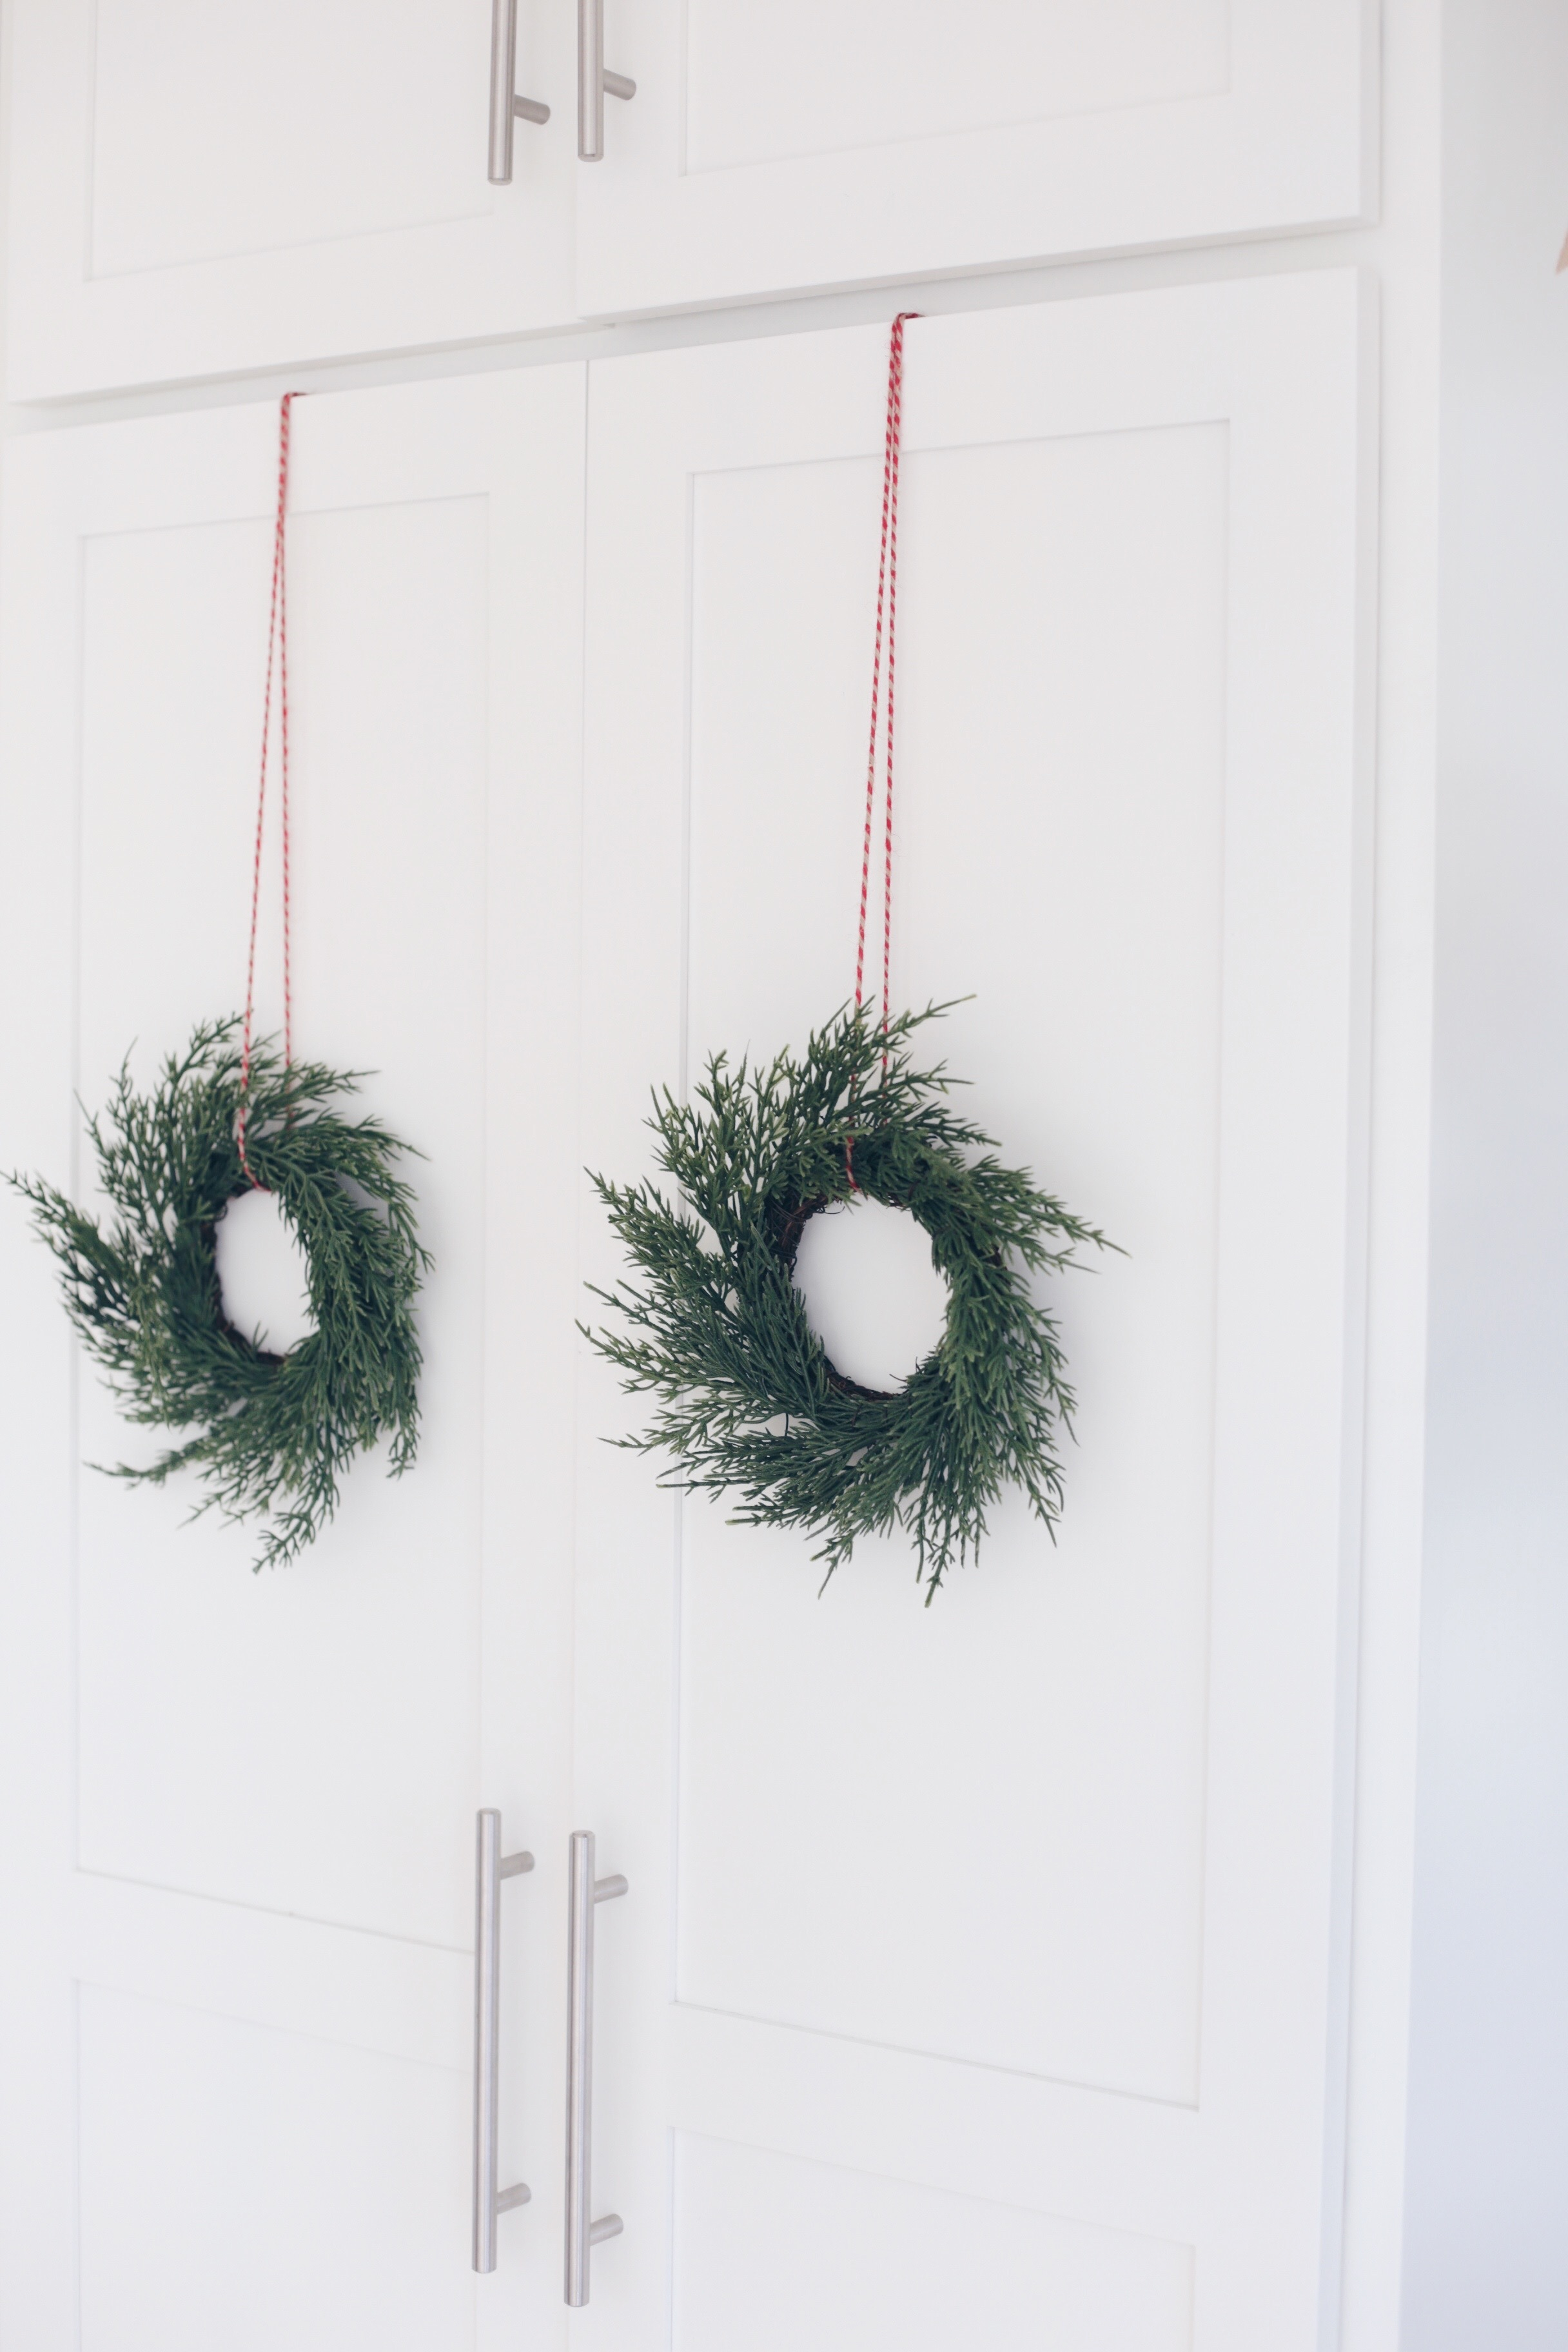 holiday mudroom decor - 2 wreaths on pinteresting plans blog